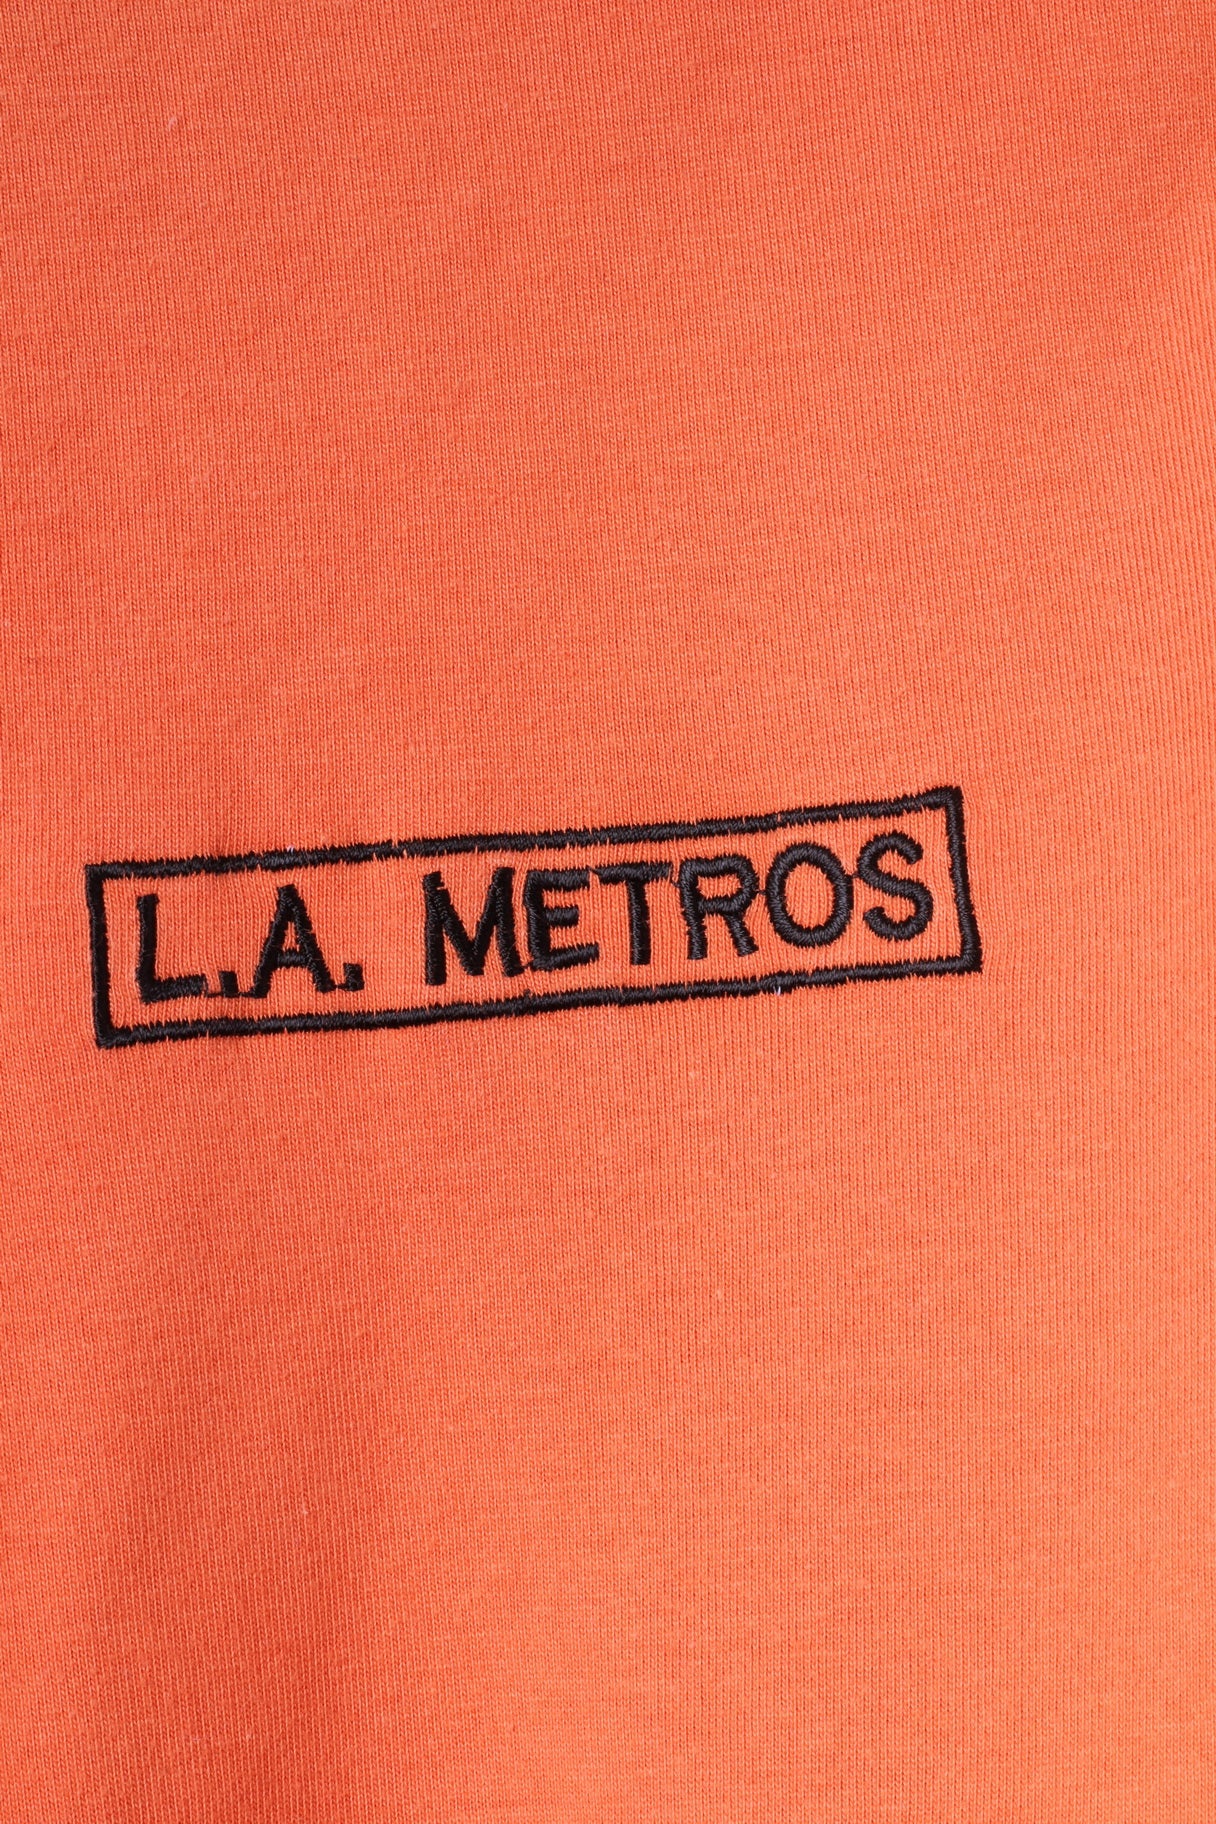 Hockey Tko Mens M Polo Shirt Orange L.A. METROS #17 Zip Neck Top